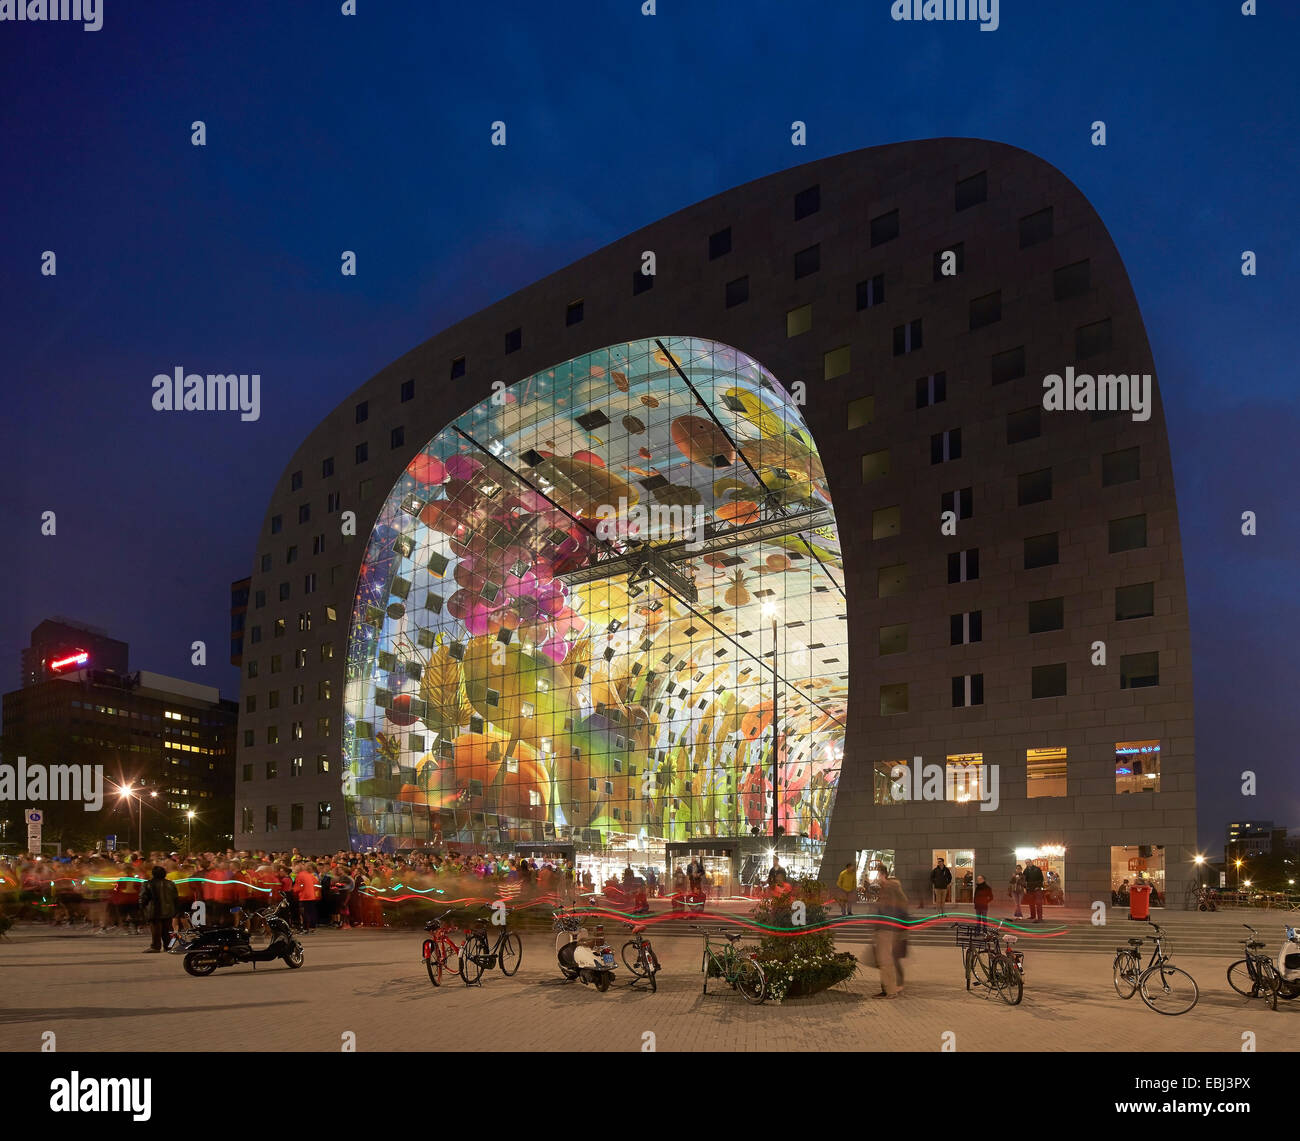 Market Hall Rotterdam, Rotterdam, Netherlands. Architect: MVRDV, 2014. Night elevation with crowd gathering. Stock Photo